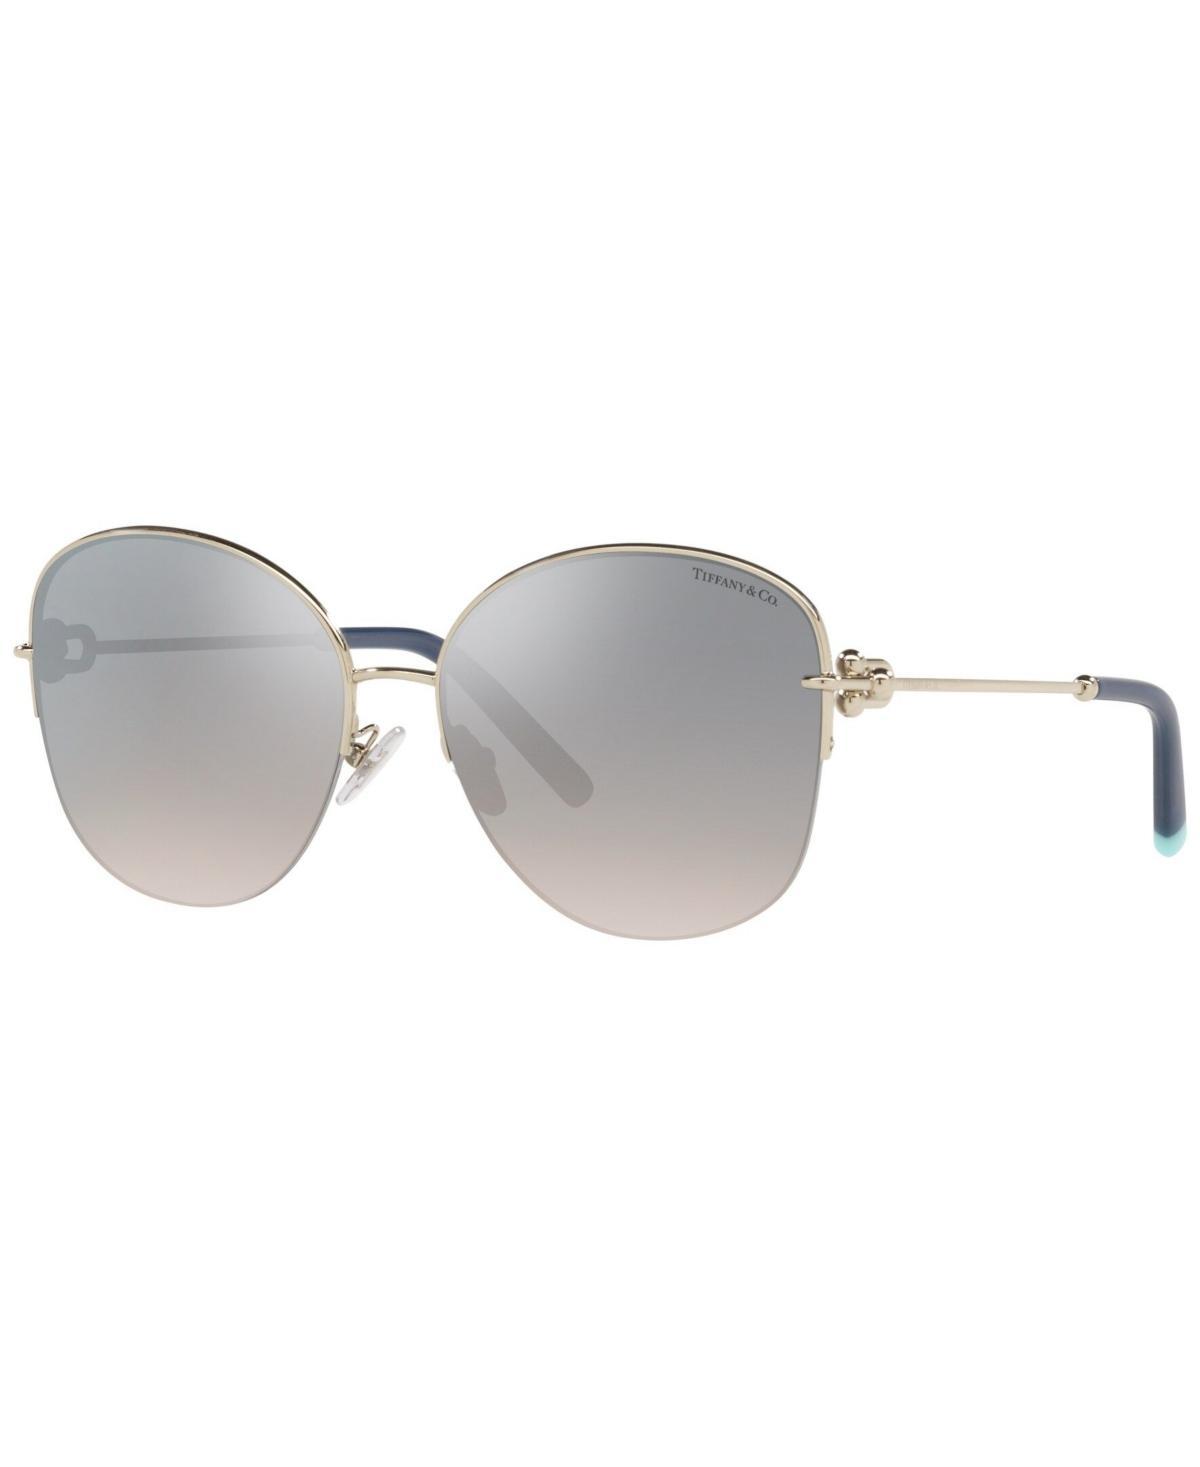 Tiffany & Co. Womens Sunglasses, TF3082 58 Product Image